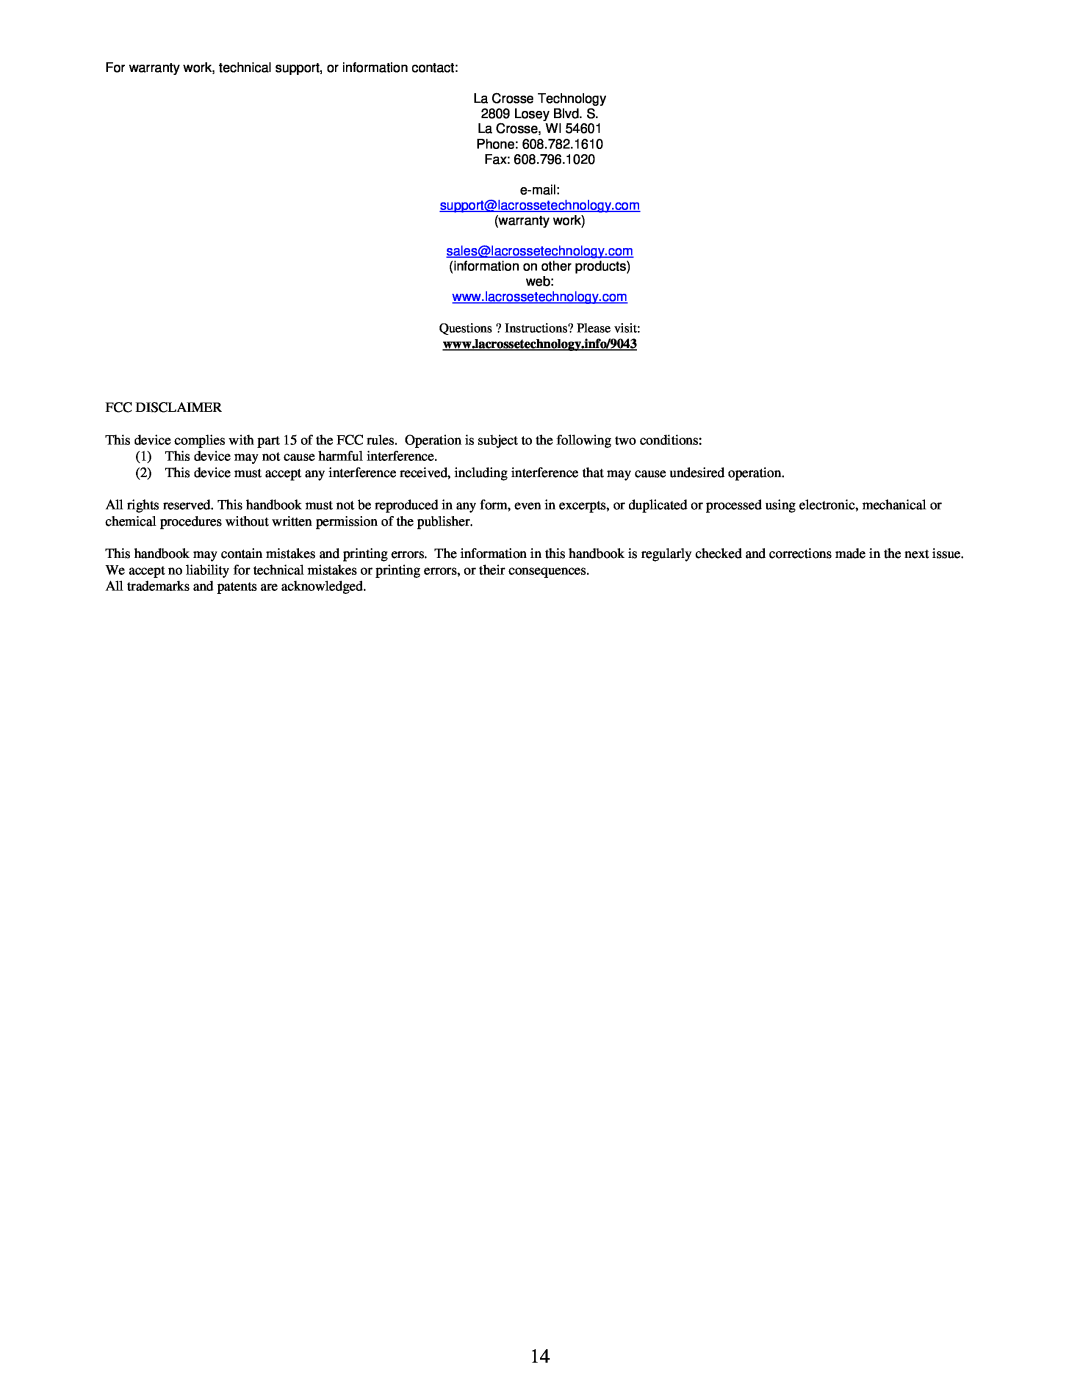 La Crosse Technology WS-9043U instruction manual Fcc Disclaimer 